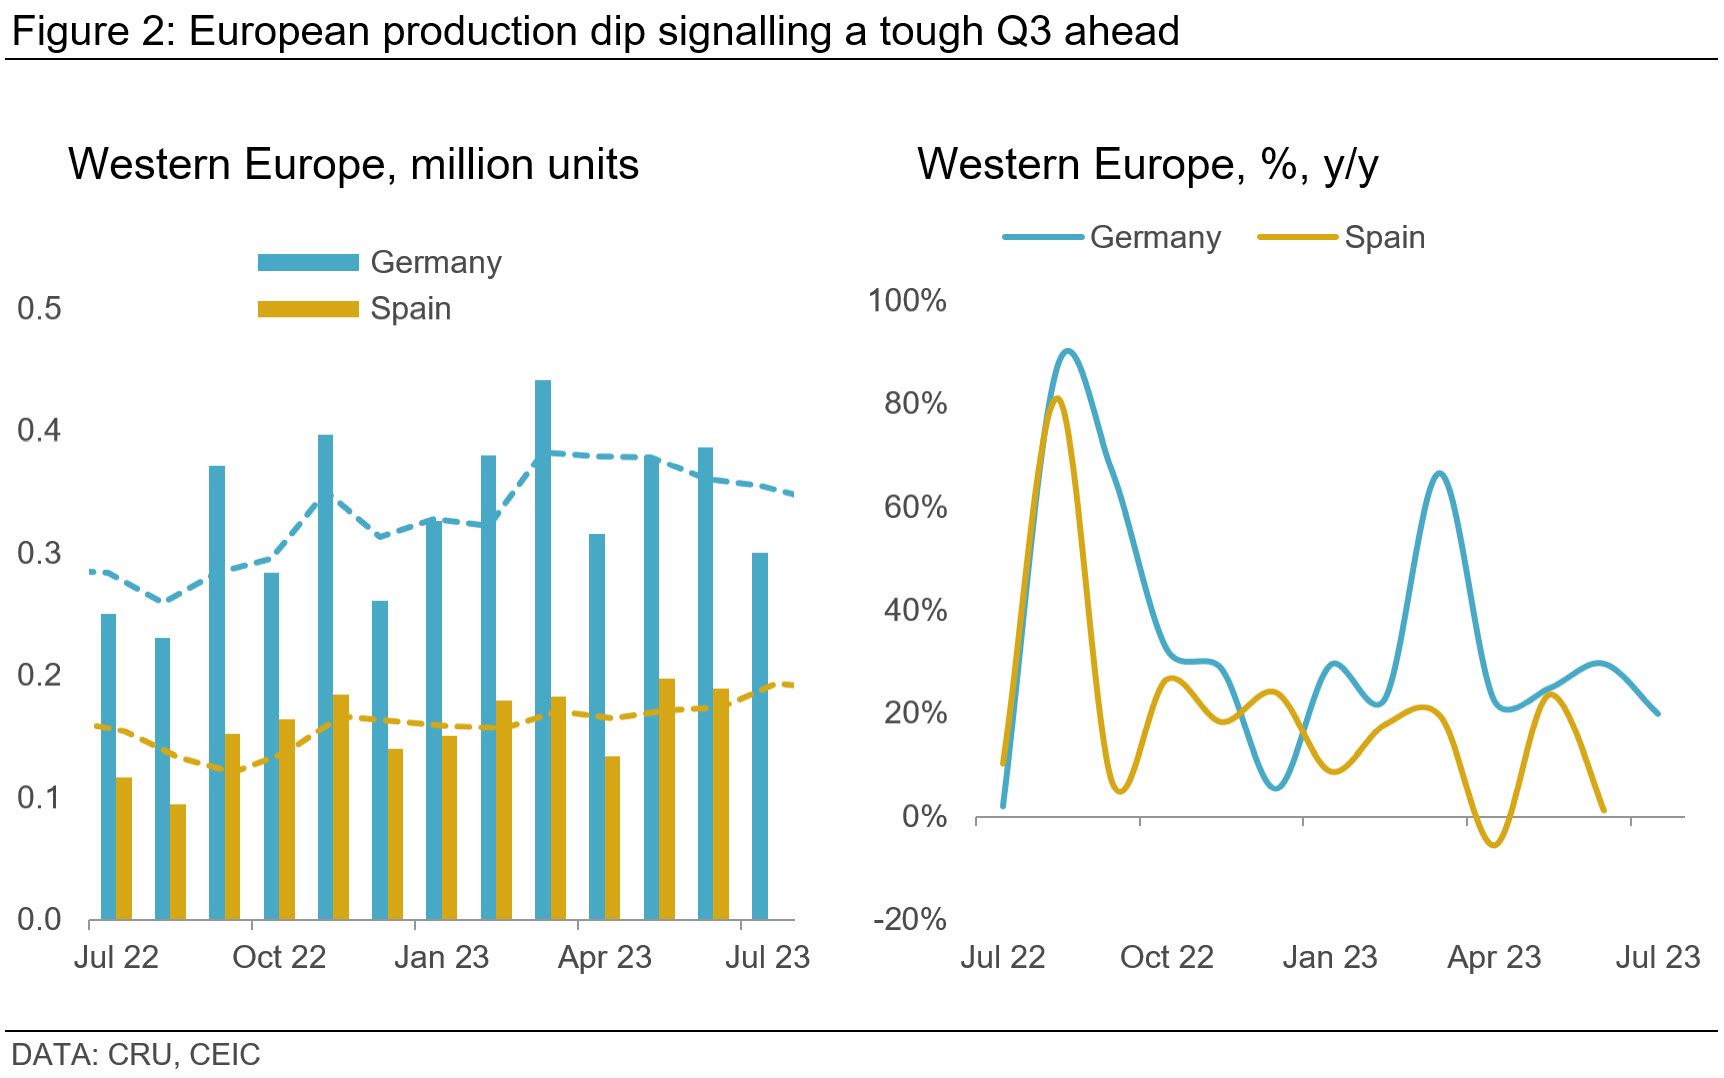 Graph showing European production dip